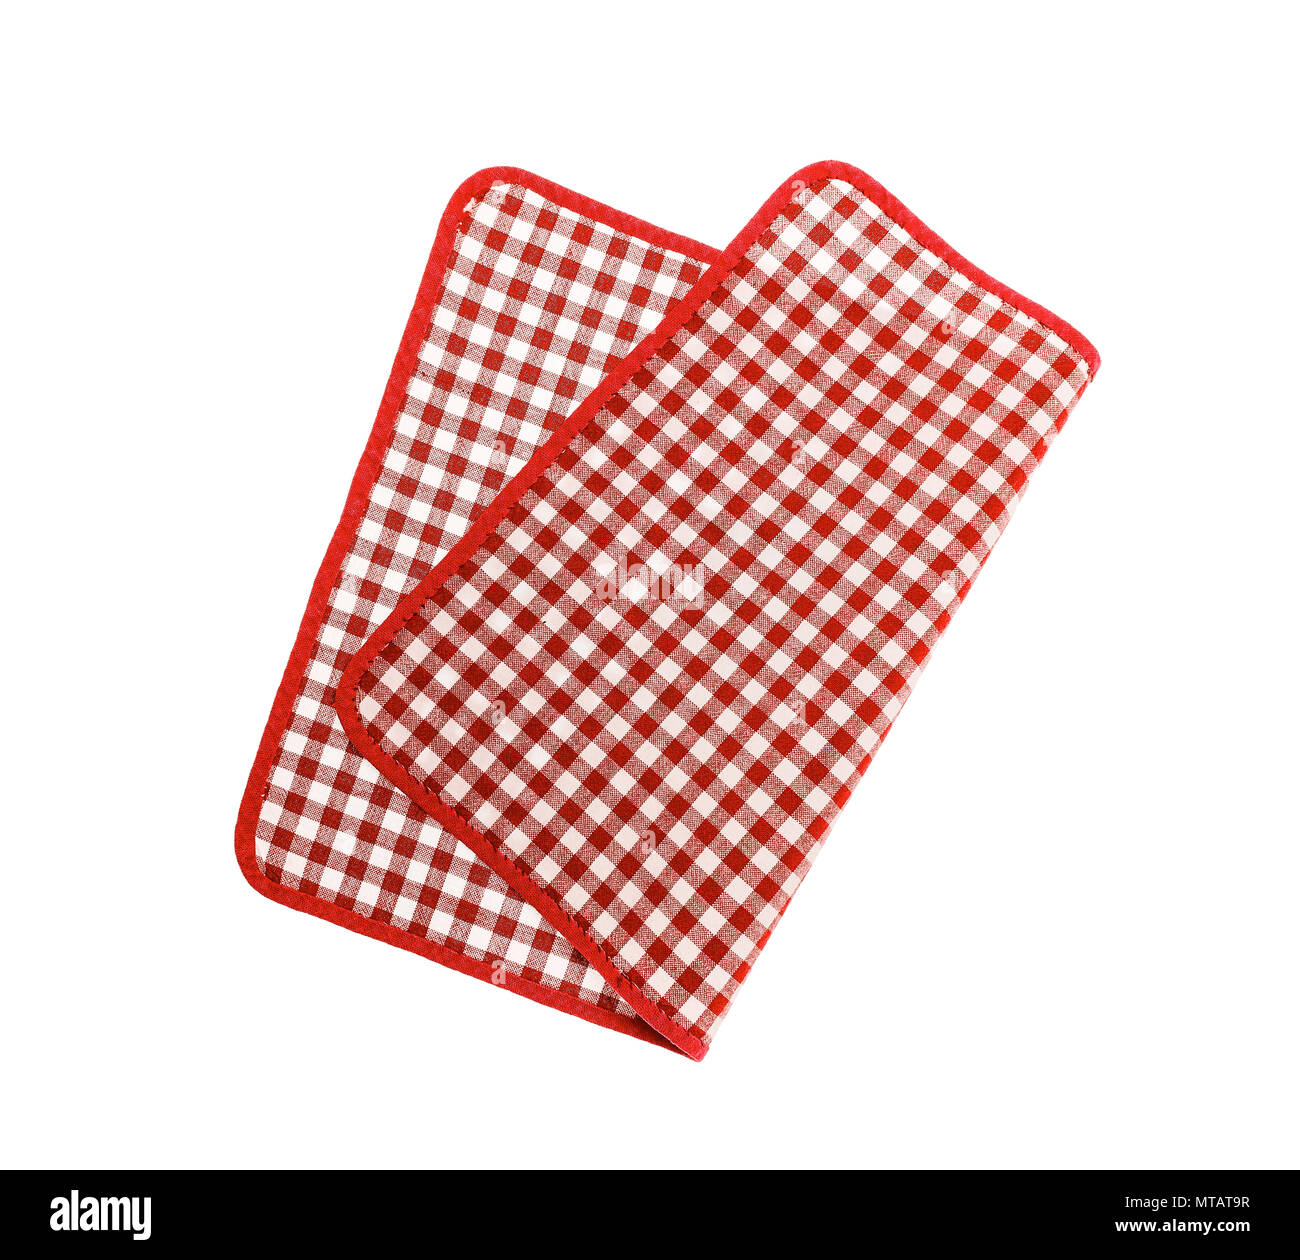 Red checkered napkin. Stock Photo